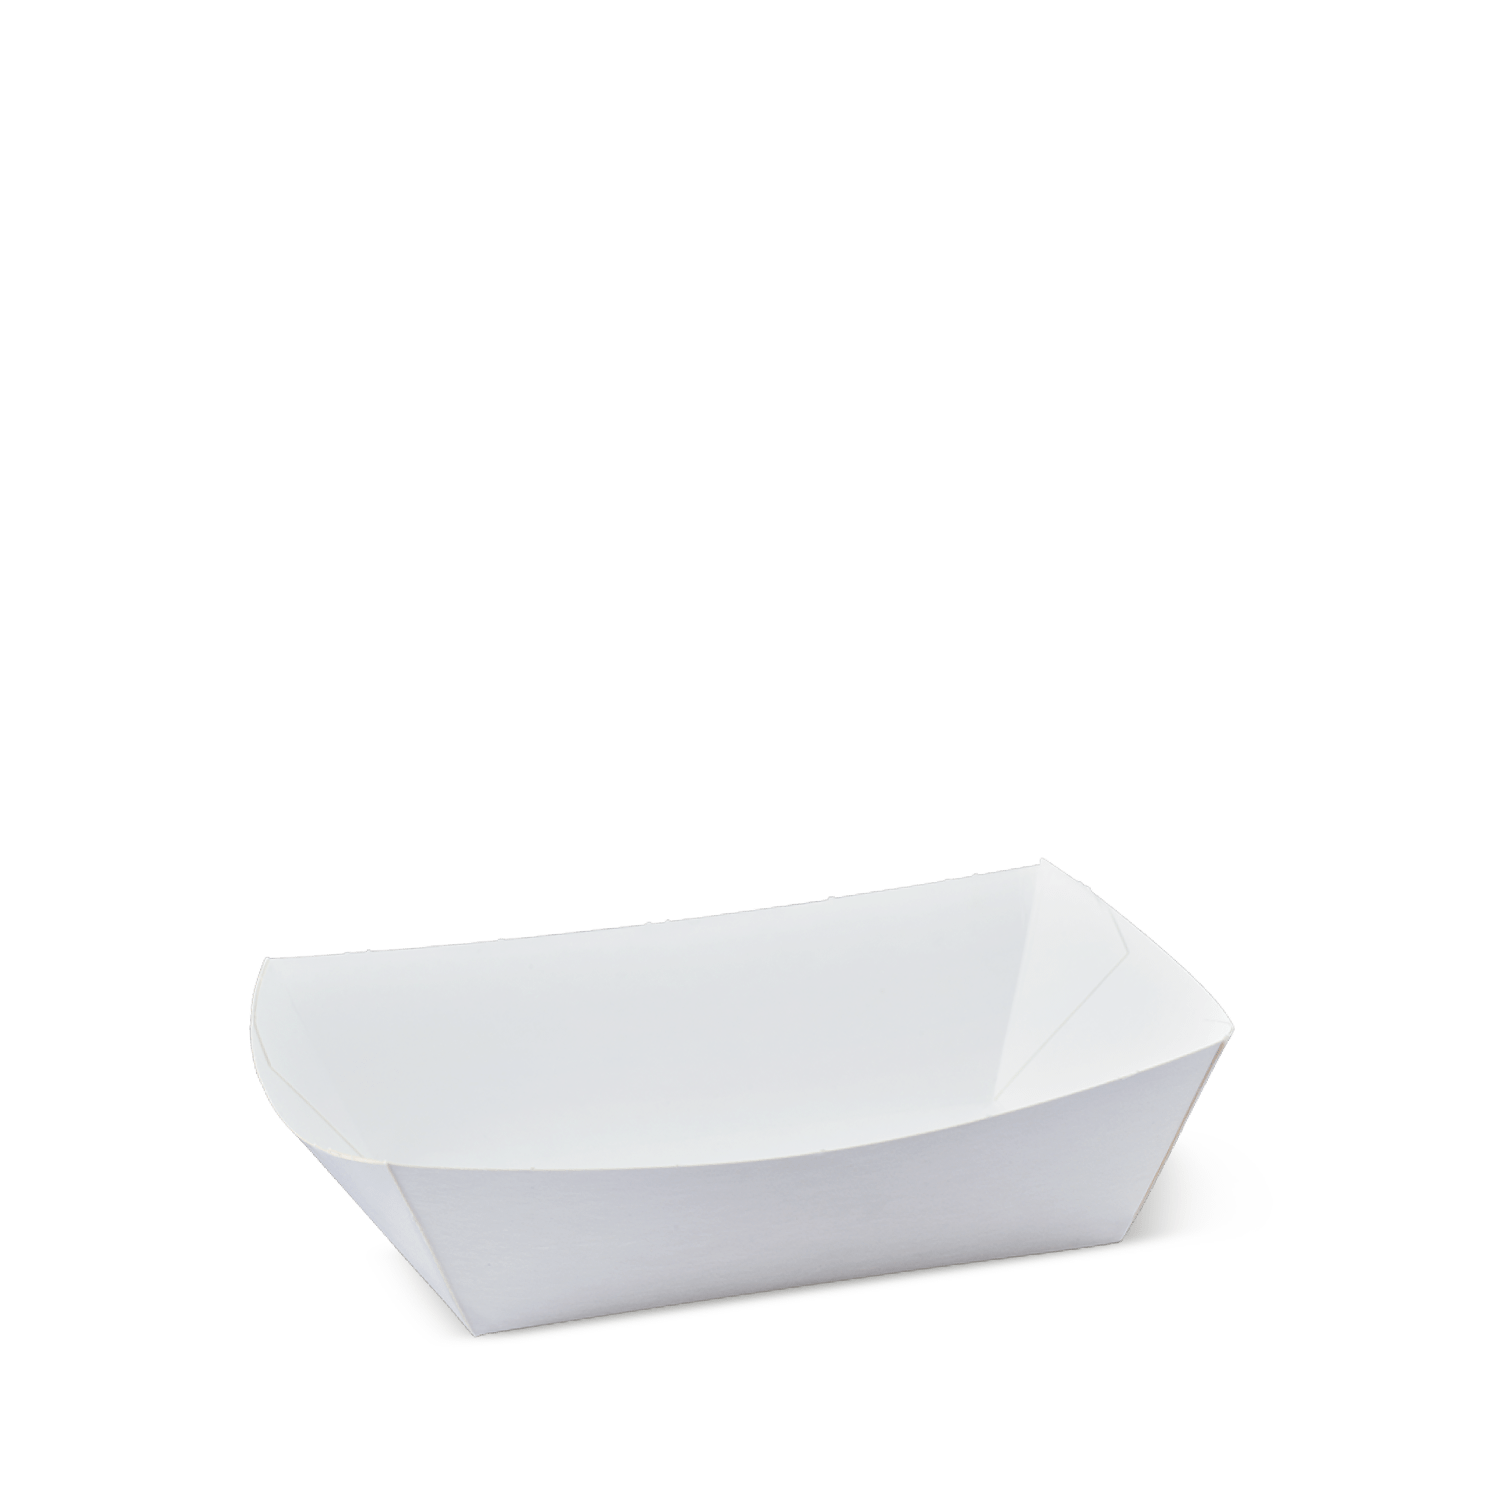 Tray Detpak No.2 Small Food (110mm x 76mm x 40mm)(Carton 1000)